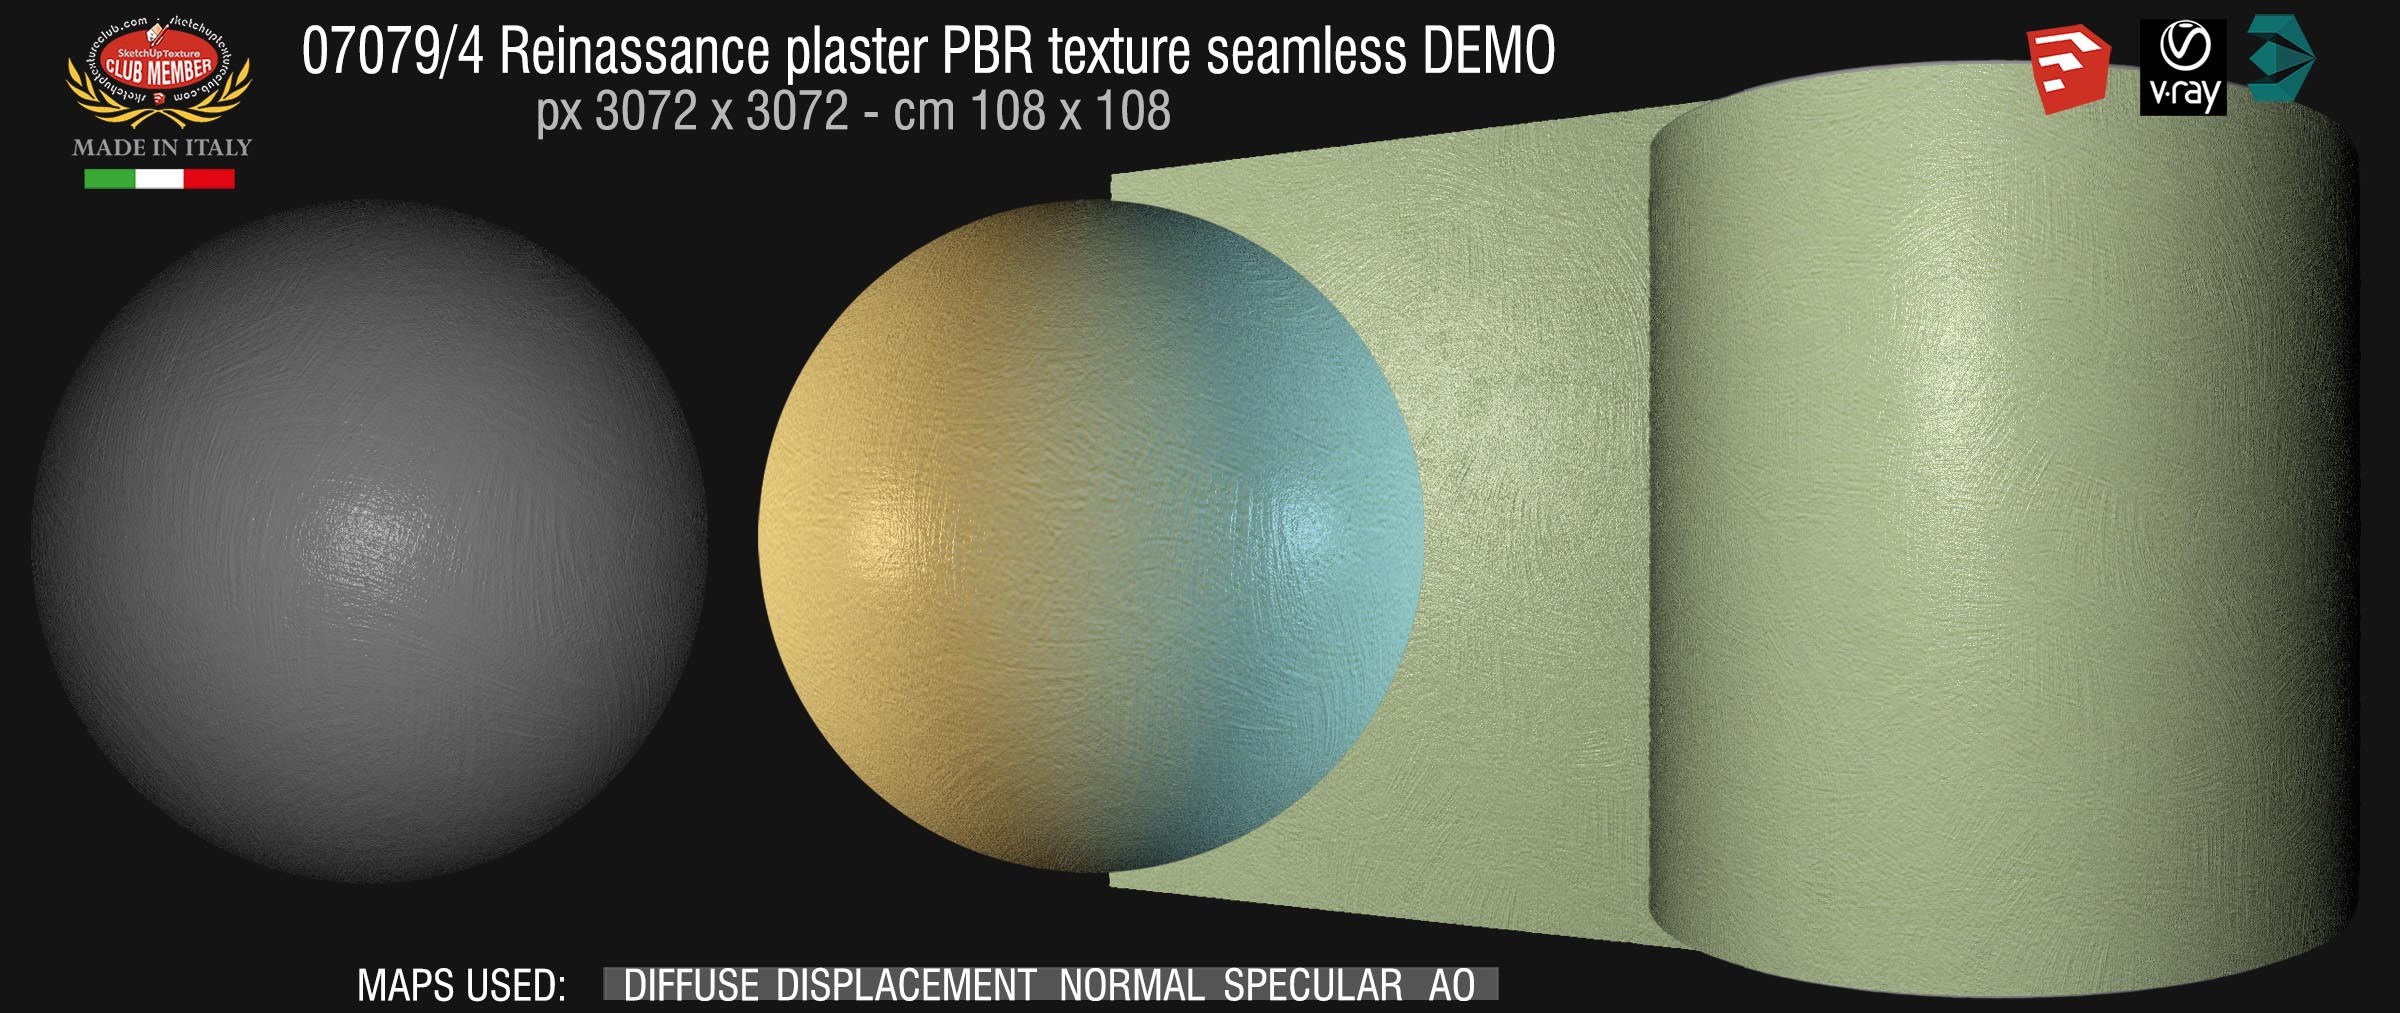 07079_4 Reinassance plaster PBR texture seamless DEMO